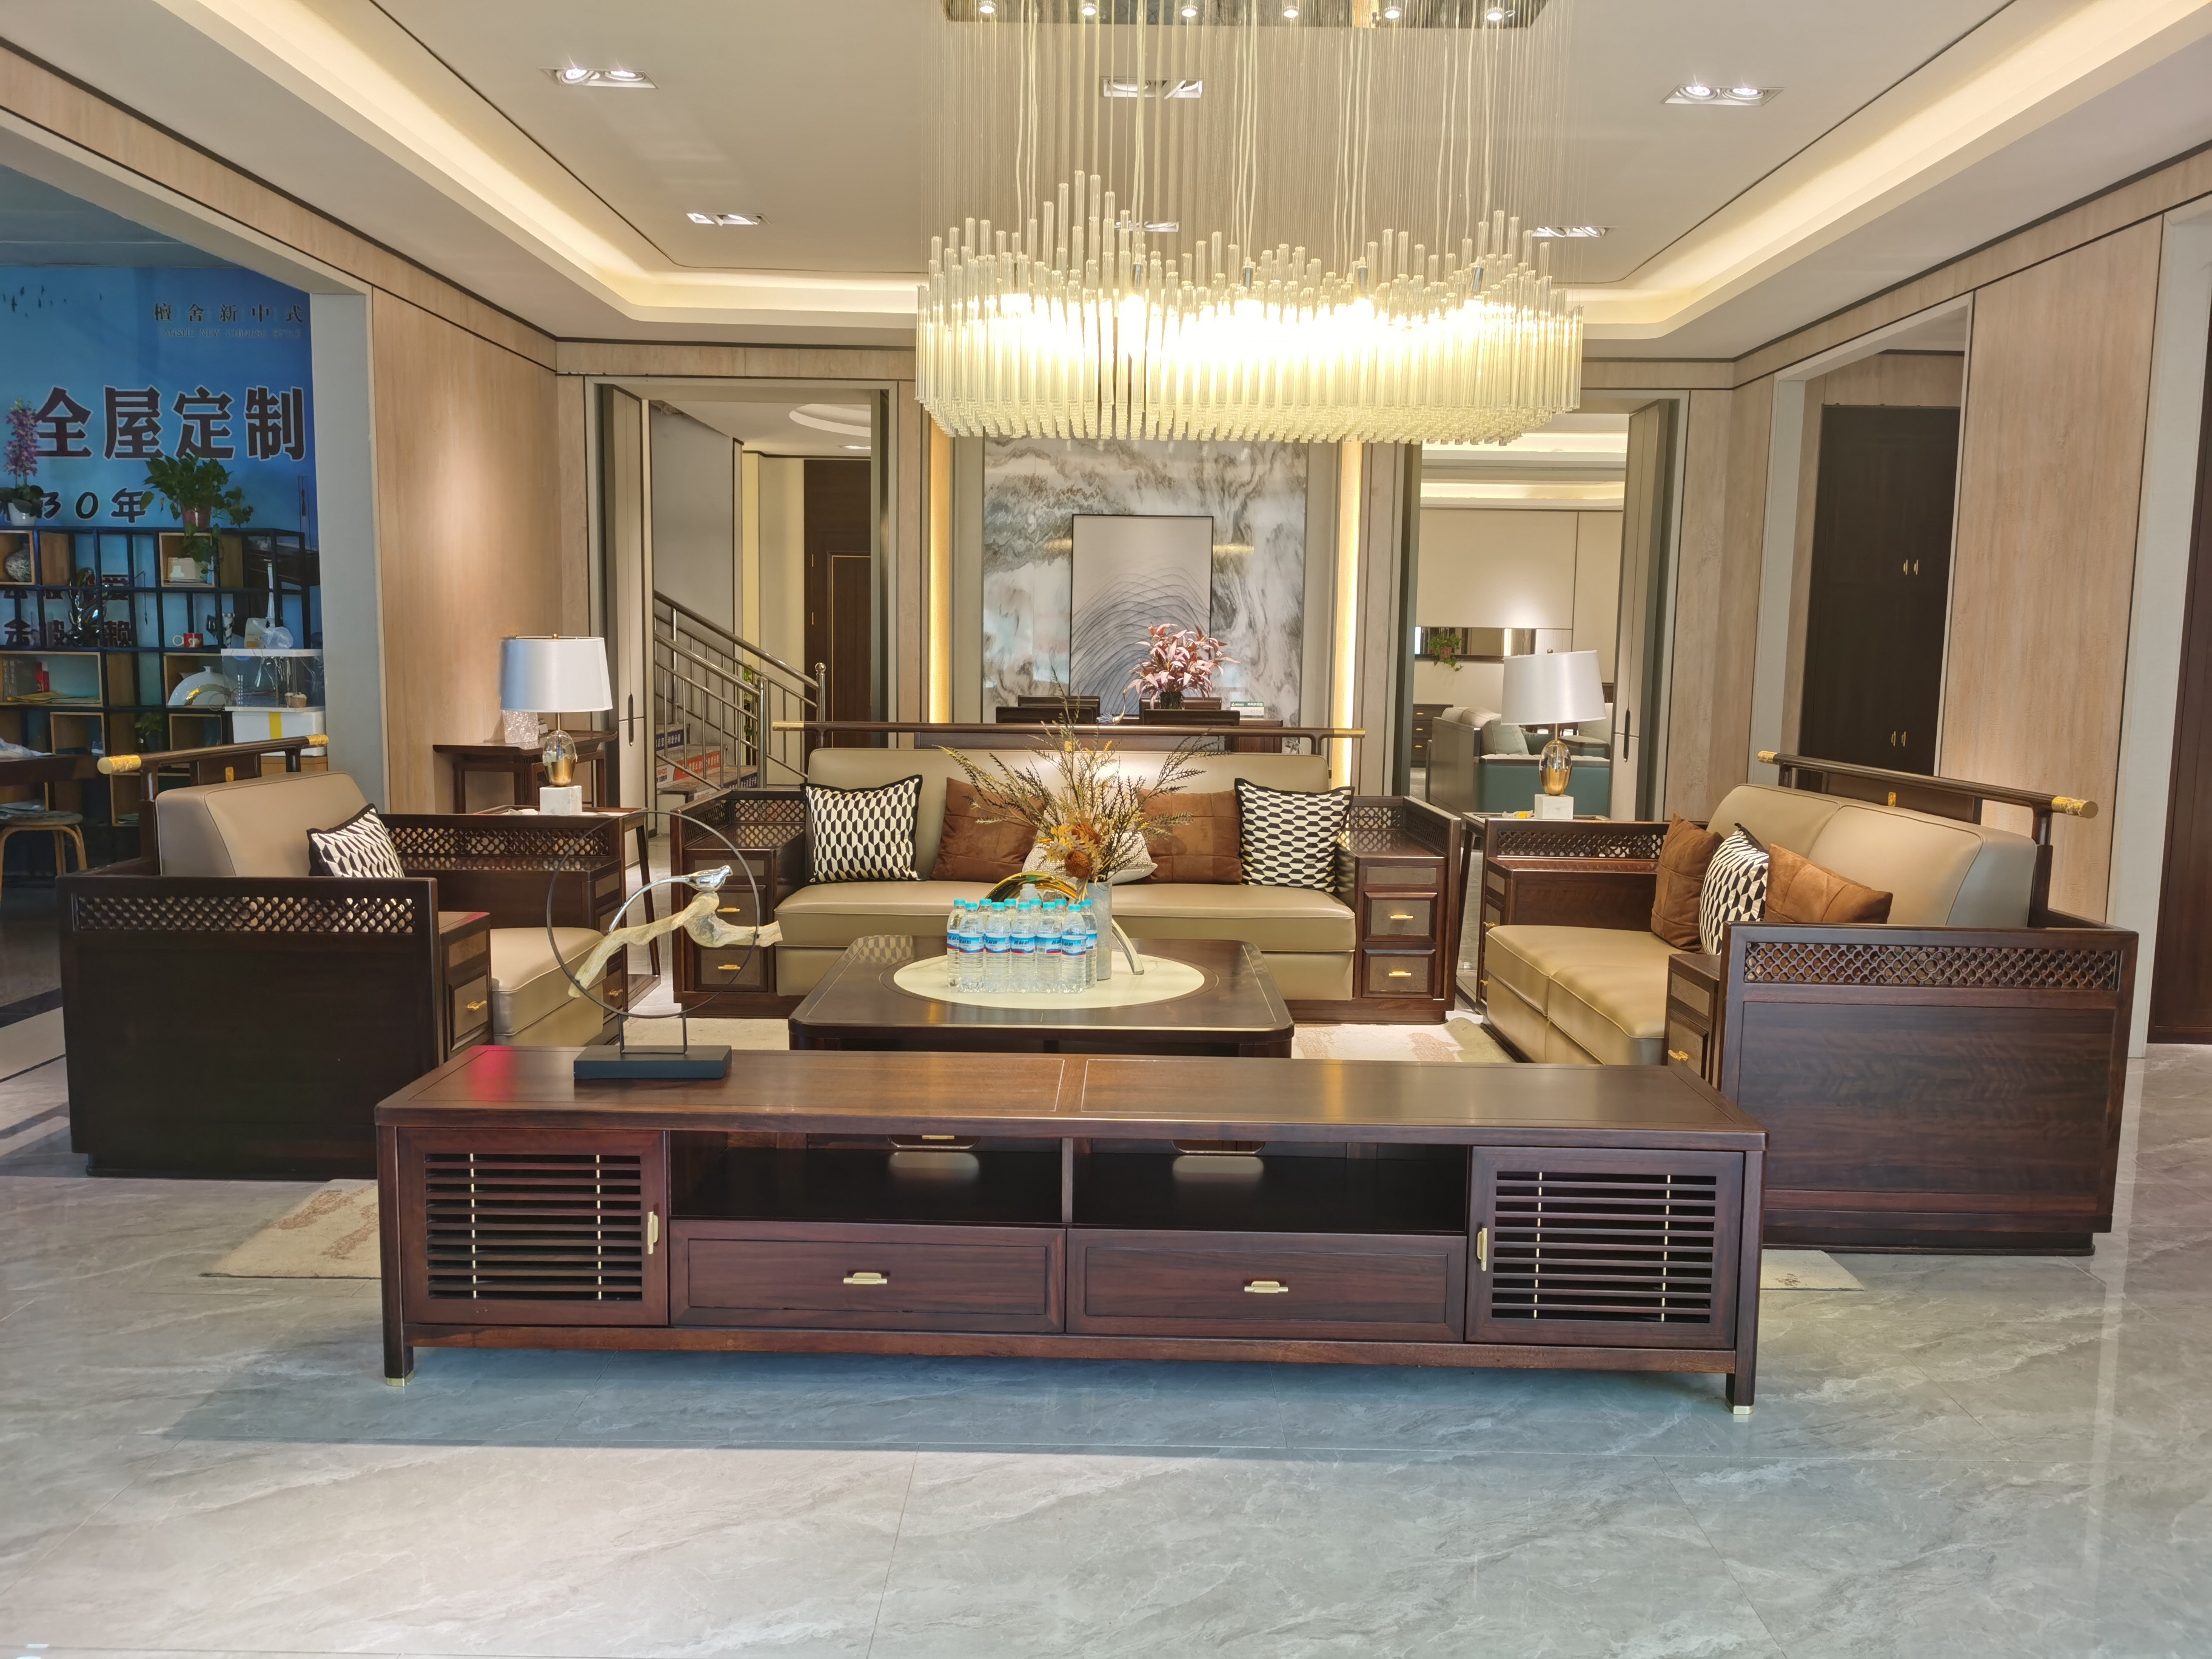 Customized living room sandalwood sofa coffee table combination, foyer table, TV cabinet